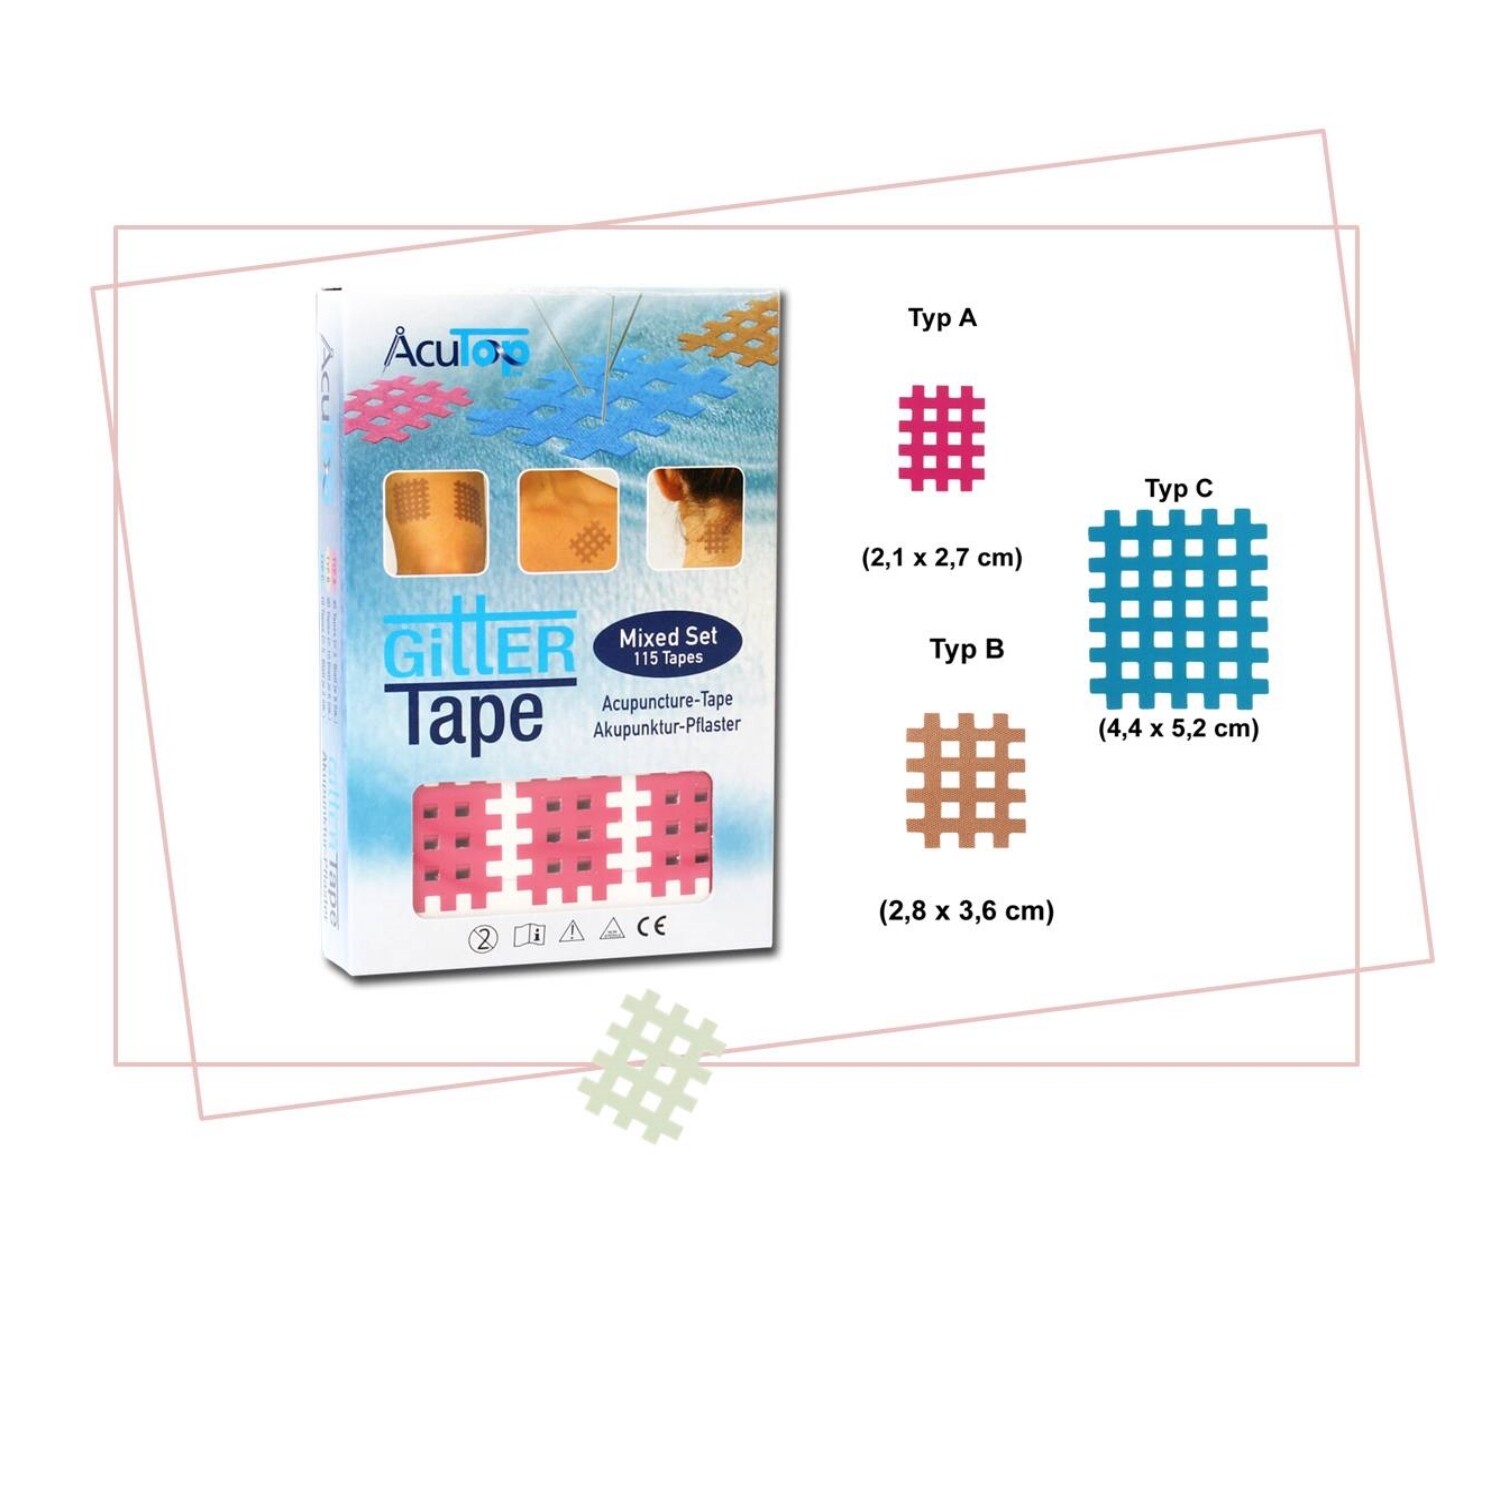 GITTER Tape AcuTop Akupunkturpflaster Mixset